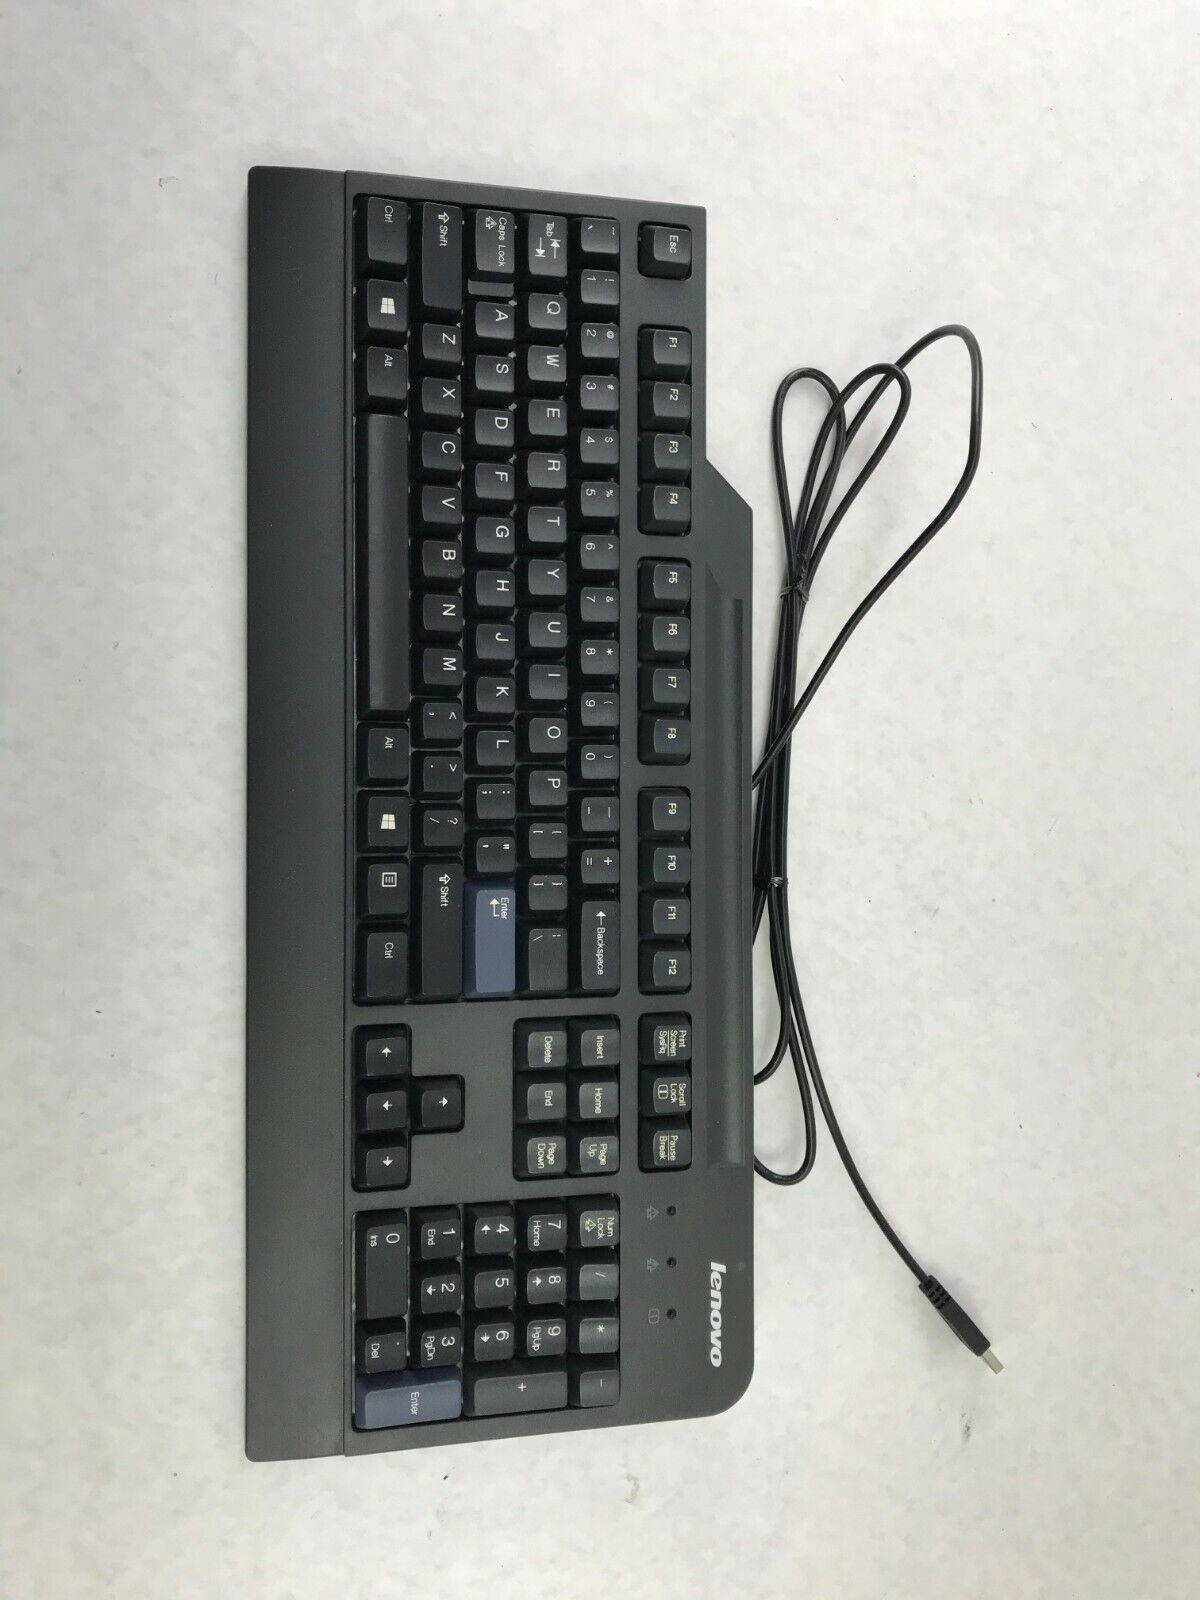 Lenovo USB Keyboard Model KU-0225 Lot of 19